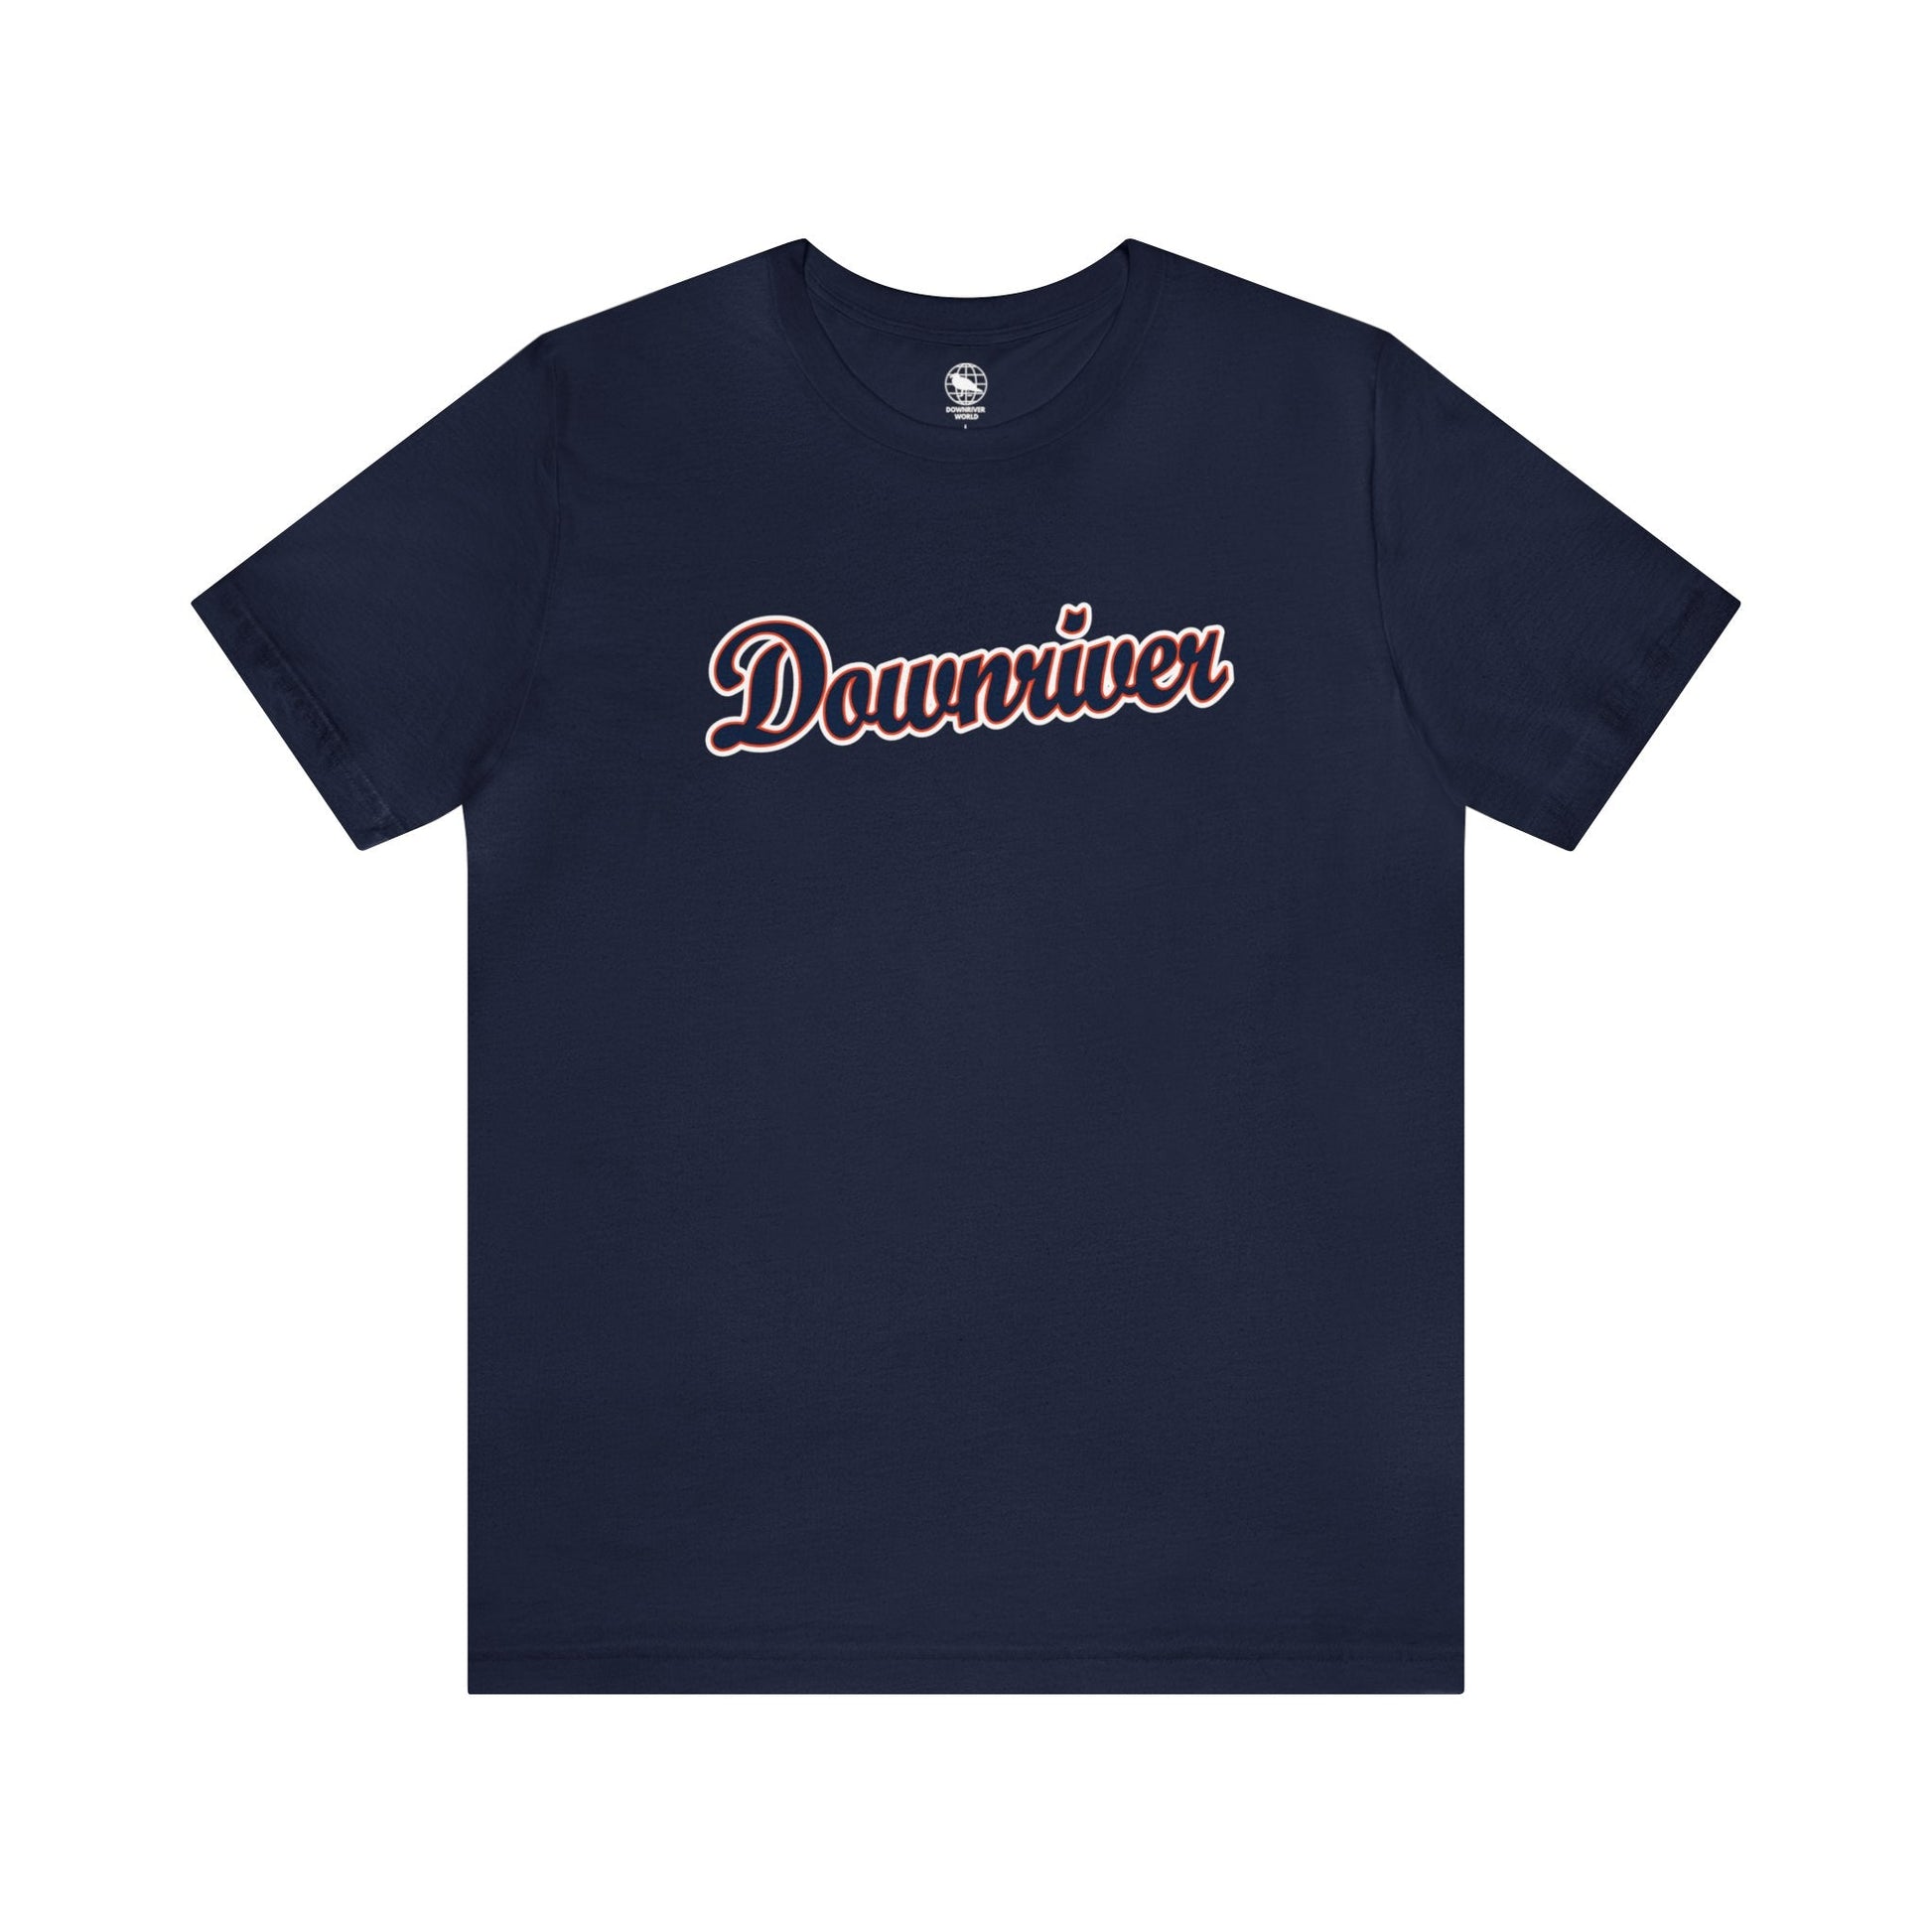 Downriver 95 Baseball Soft Jersey T Shirt | Downriver Clothing Apparel | Detroit Michigan | Downriver World